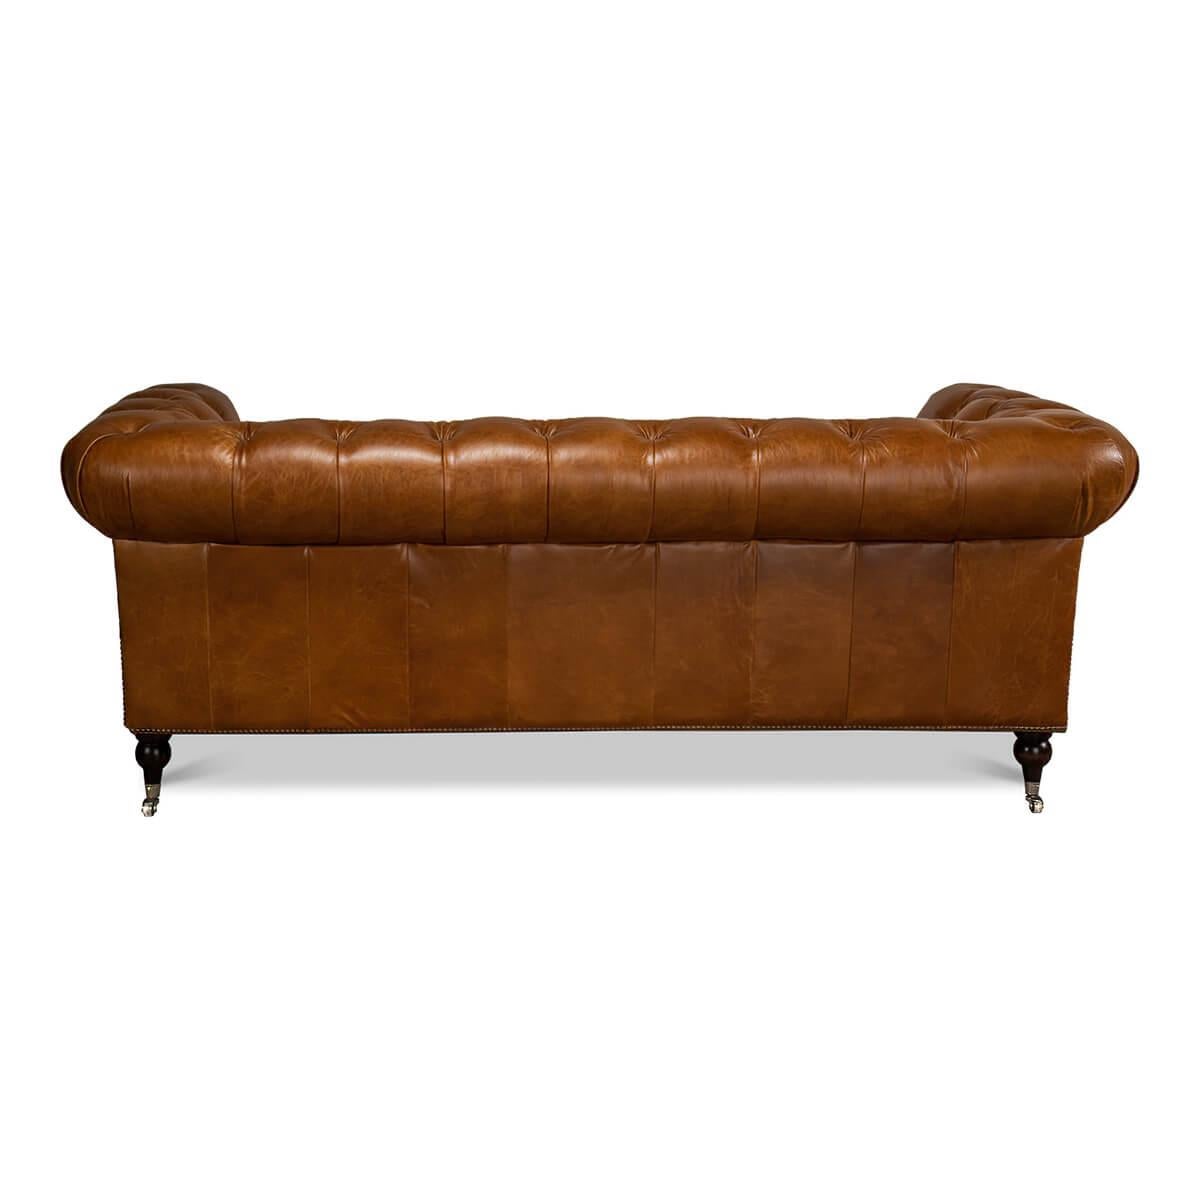 vintage leather cuba style sofa